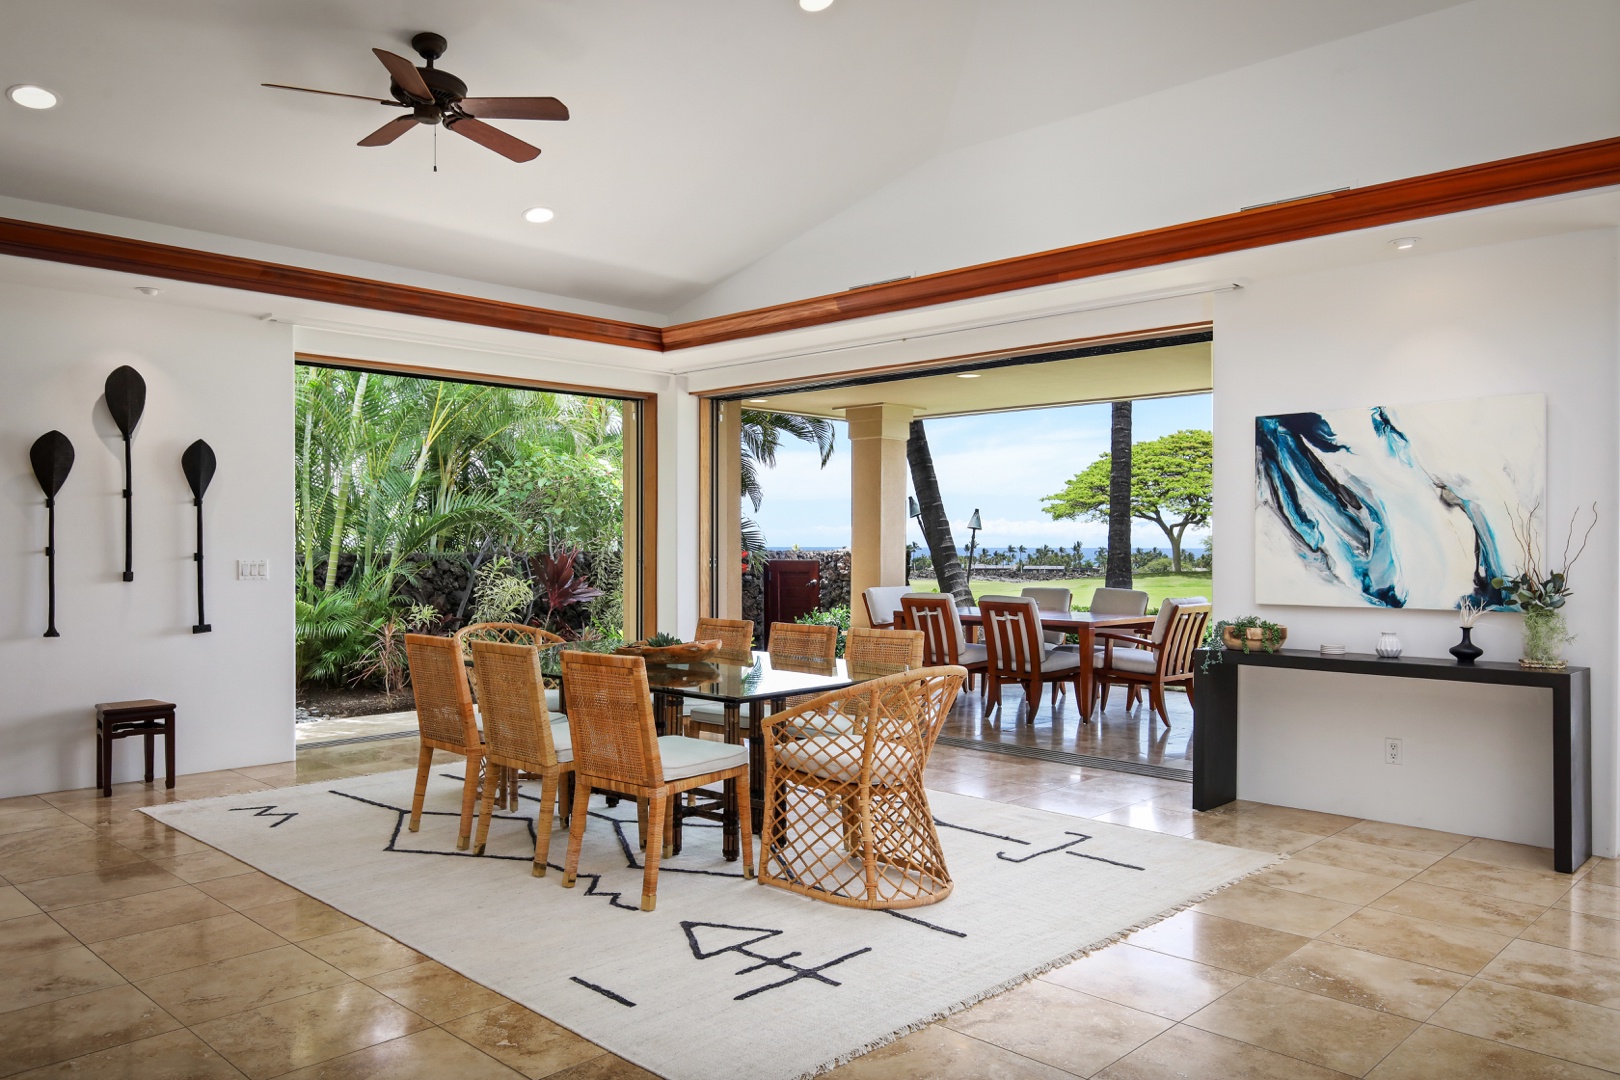 Kailua Kona Vacation Rentals, 4BD Pakui Street (147) Estate Home at Four Seasons Resort at Hualalai - Chic and spacious interior dining area for eight.